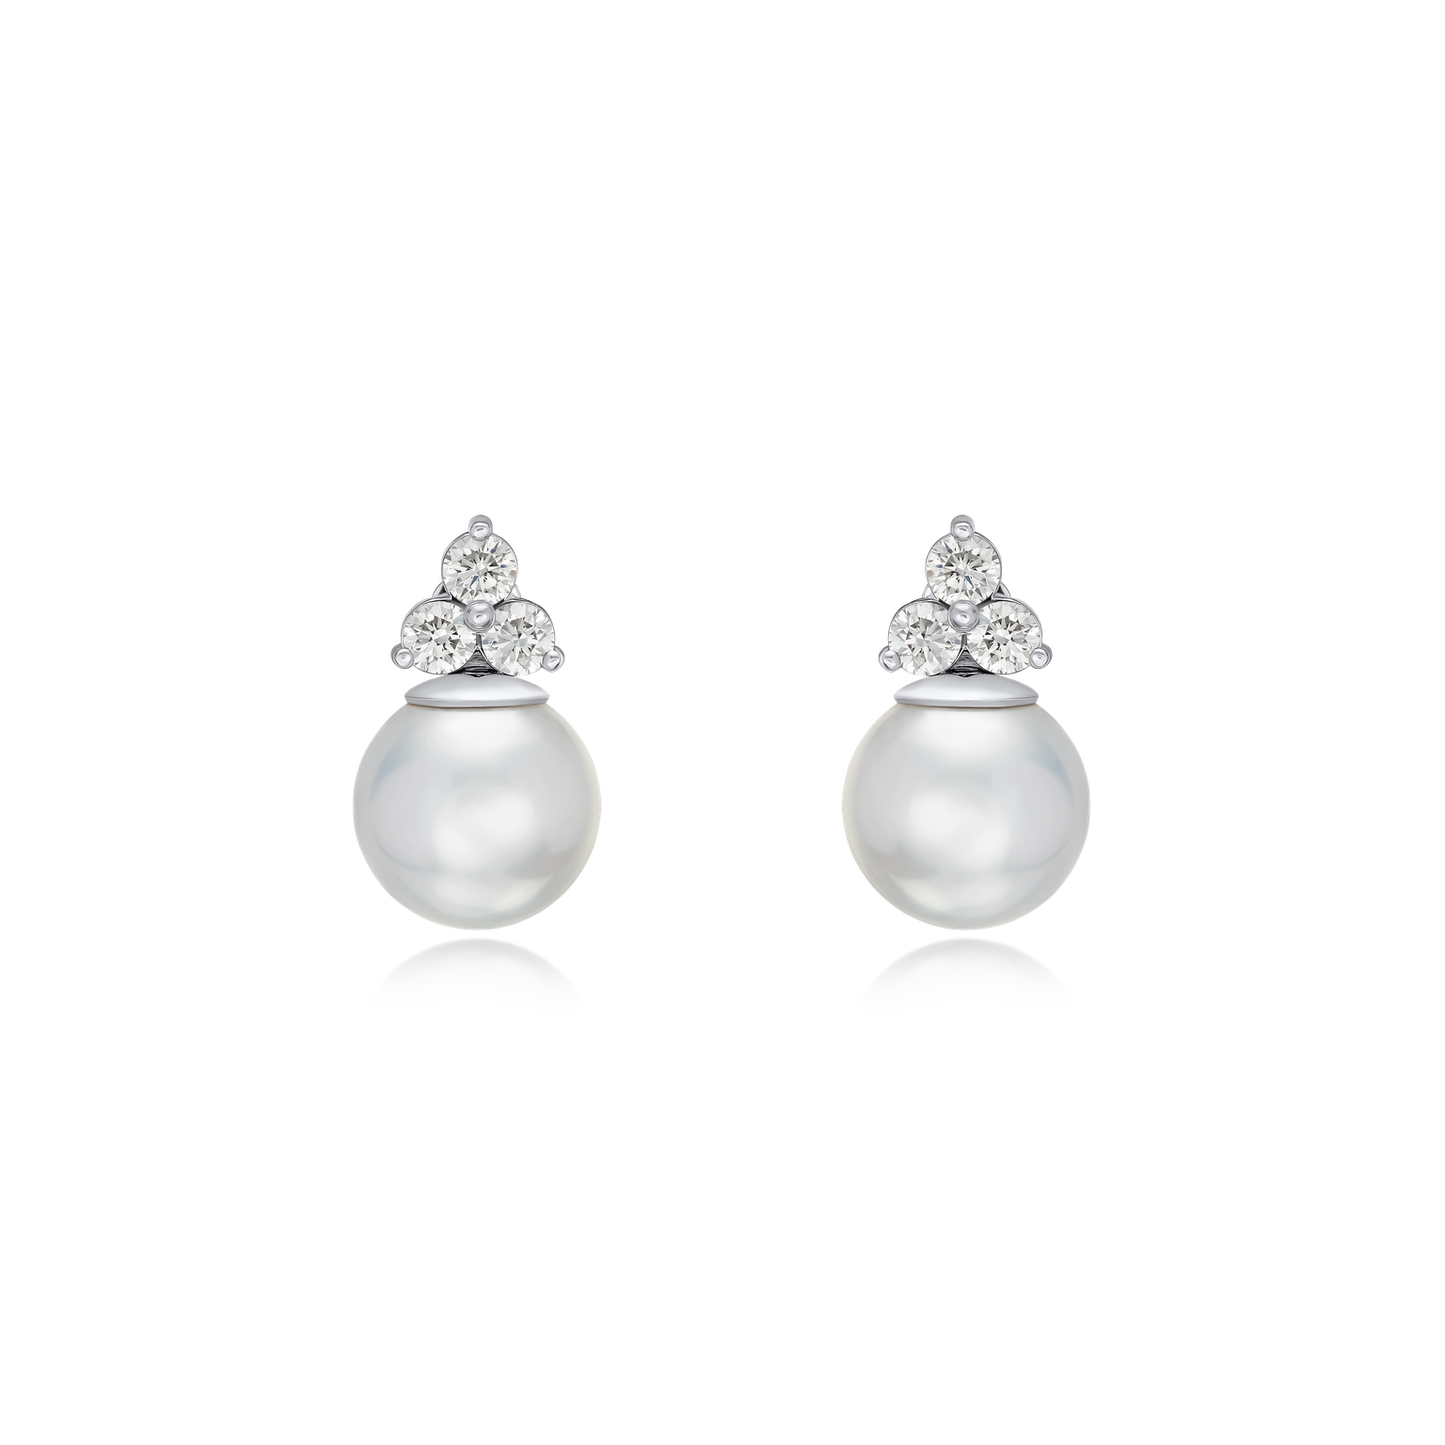 11-12mm Pearl and Trefoil Diamond Earrings